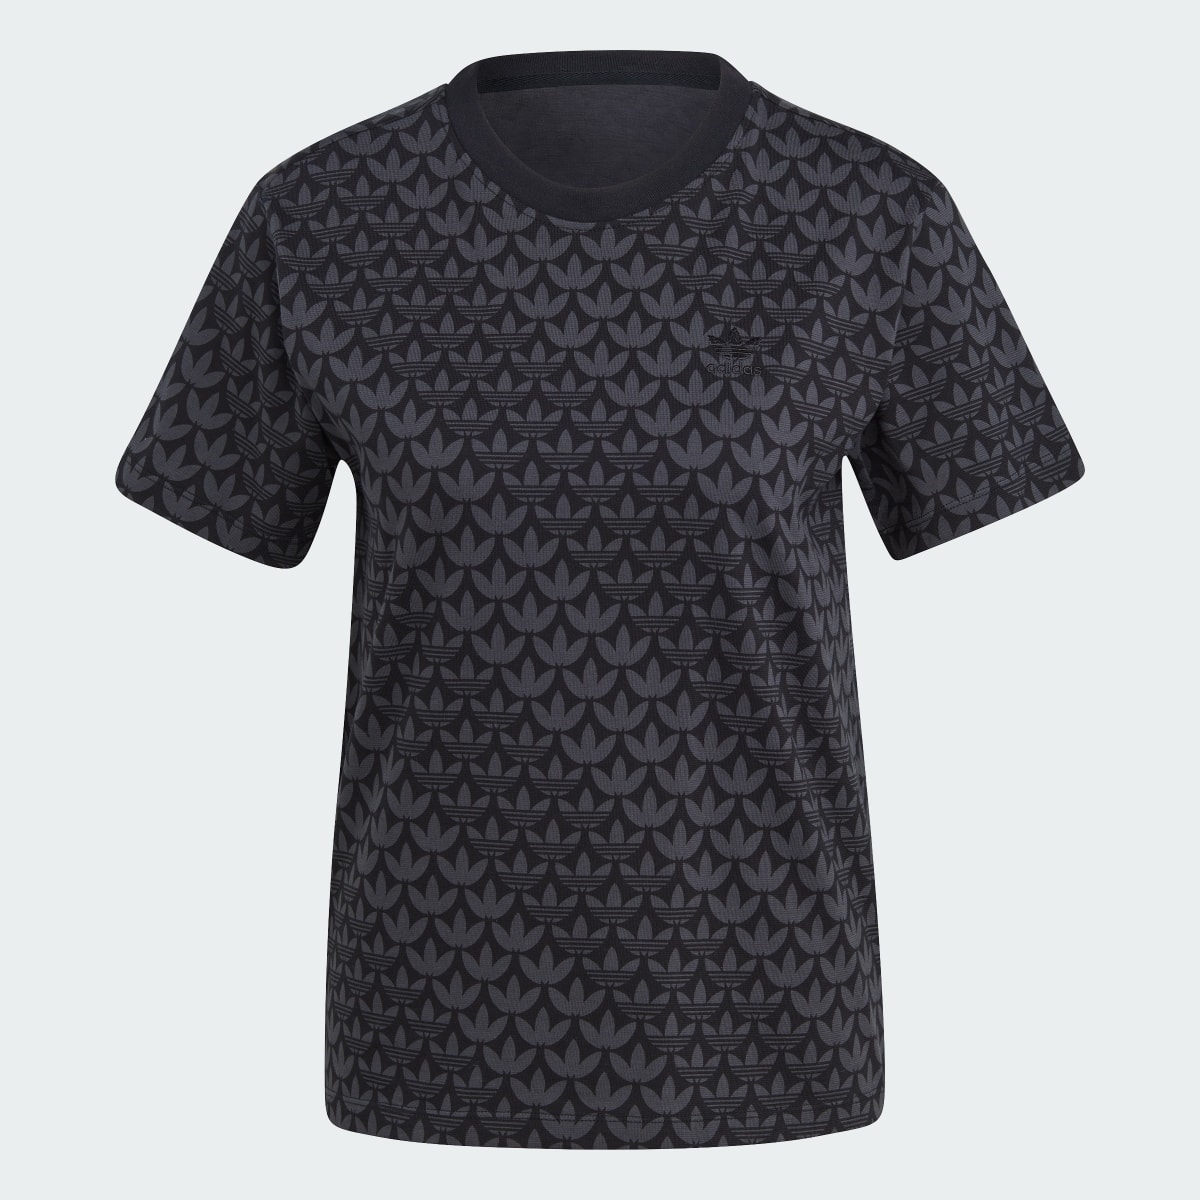 Adidas Trefoil Monogram T-Shirt. 6